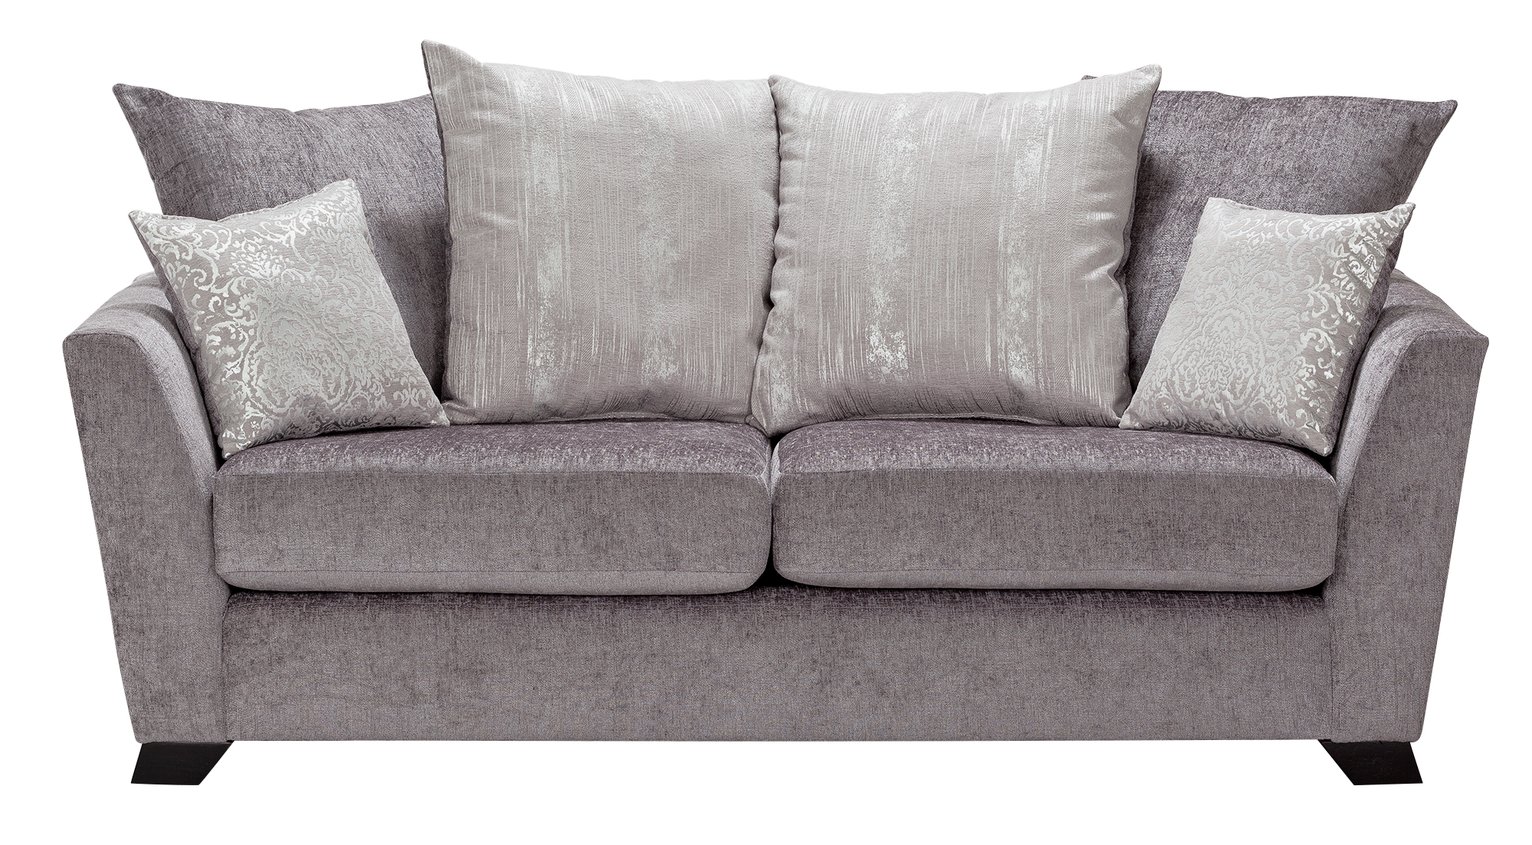 Argos Home Vivienne 3 Seater Fabric Sofa - Silver